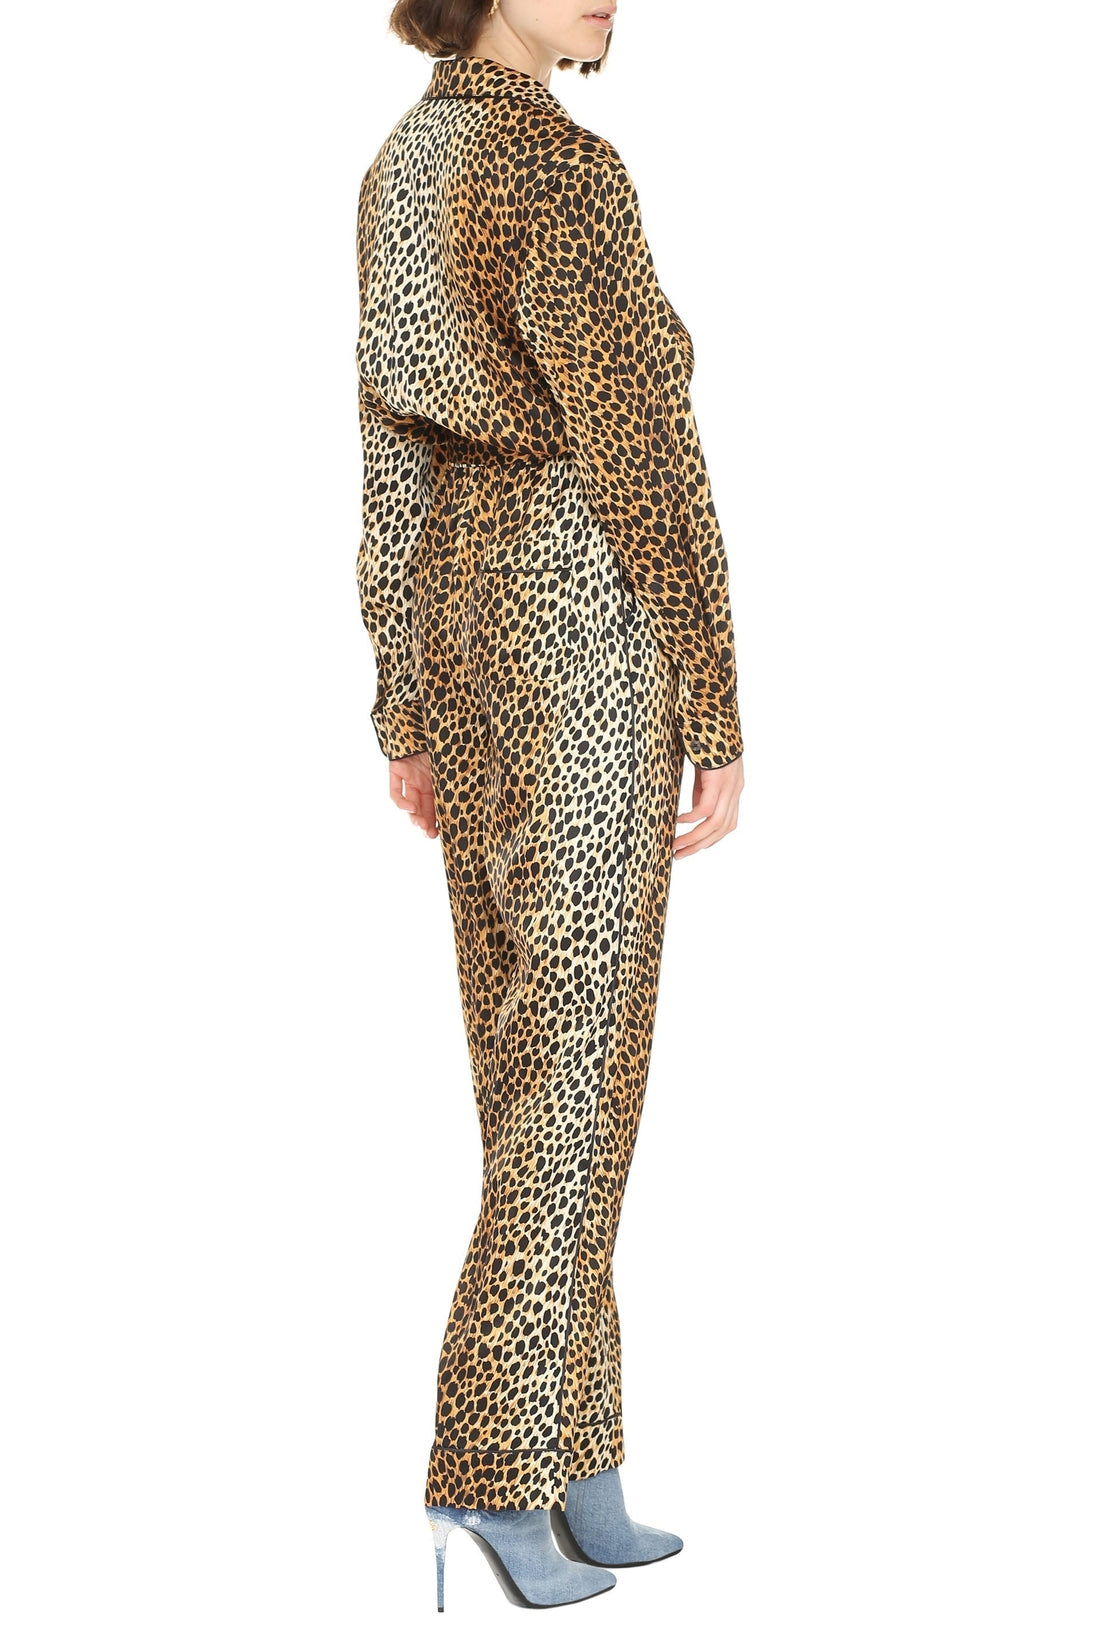 Dolce & Gabbana-OUTLET-SALE-Printed silk jumpsuit-ARCHIVIST